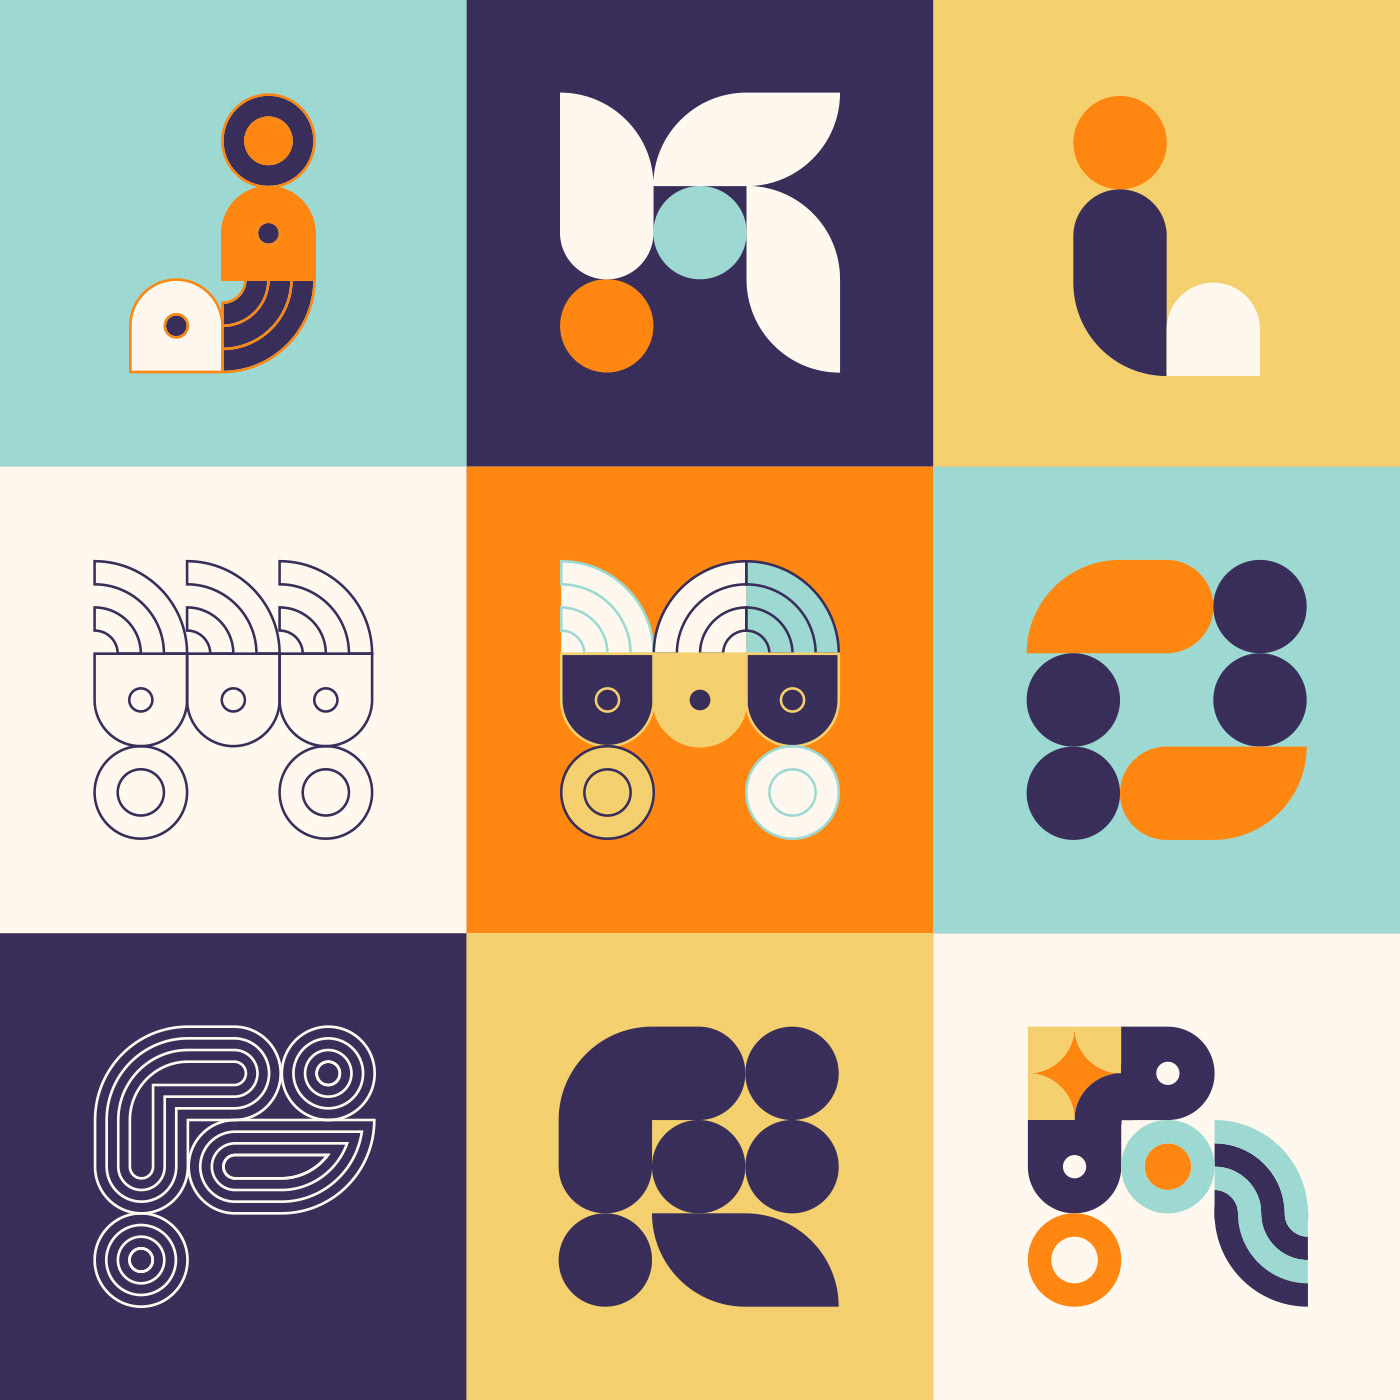 Amuki generative geometric modulartype p5js patternfont sudtipos tinkuy typography  